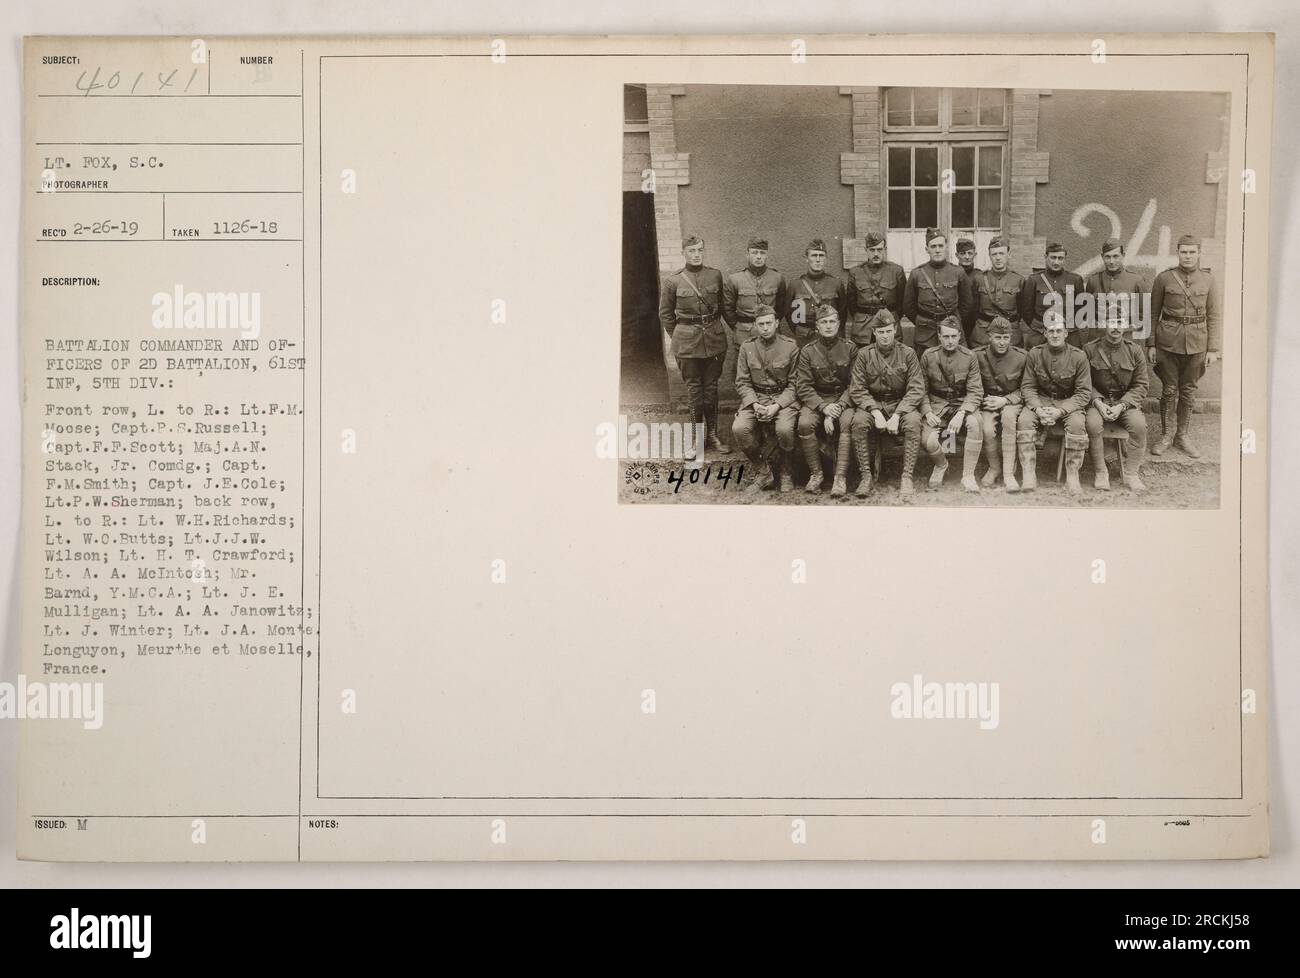 Bataillonskommandeur und Offiziere des 2. Bataillons, 61. Infanterie, 5. Division. Erste Reihe, von links nach rechts: LT. P.M. Elch, Kapitän P.S. Russell, Kapitän F.P. Scott, Major A.N. Stapel Jr. (Kommandierender Offizier), Captain F.M. Smith, Hauptmann J.E. Cole, Leutnant P. W. Sherman. Hintere Reihe, von links nach rechts: LT. W.H. Richards, Leutnant W.O. Butts, LT. J.W. Wilson, Leutnant H.T. Crawford, Leutnant A. A. McIntosh, Mr. Barnd (Y.M.C.A.), Leutnant J.E. Mulligan, Leutnant A. A. Janowit, Leutnant J. Winter, Leutnant J. A. Monte. Aufgenommen in Longuyon, Meurthe et Moselle, Frankreich. Stockfoto